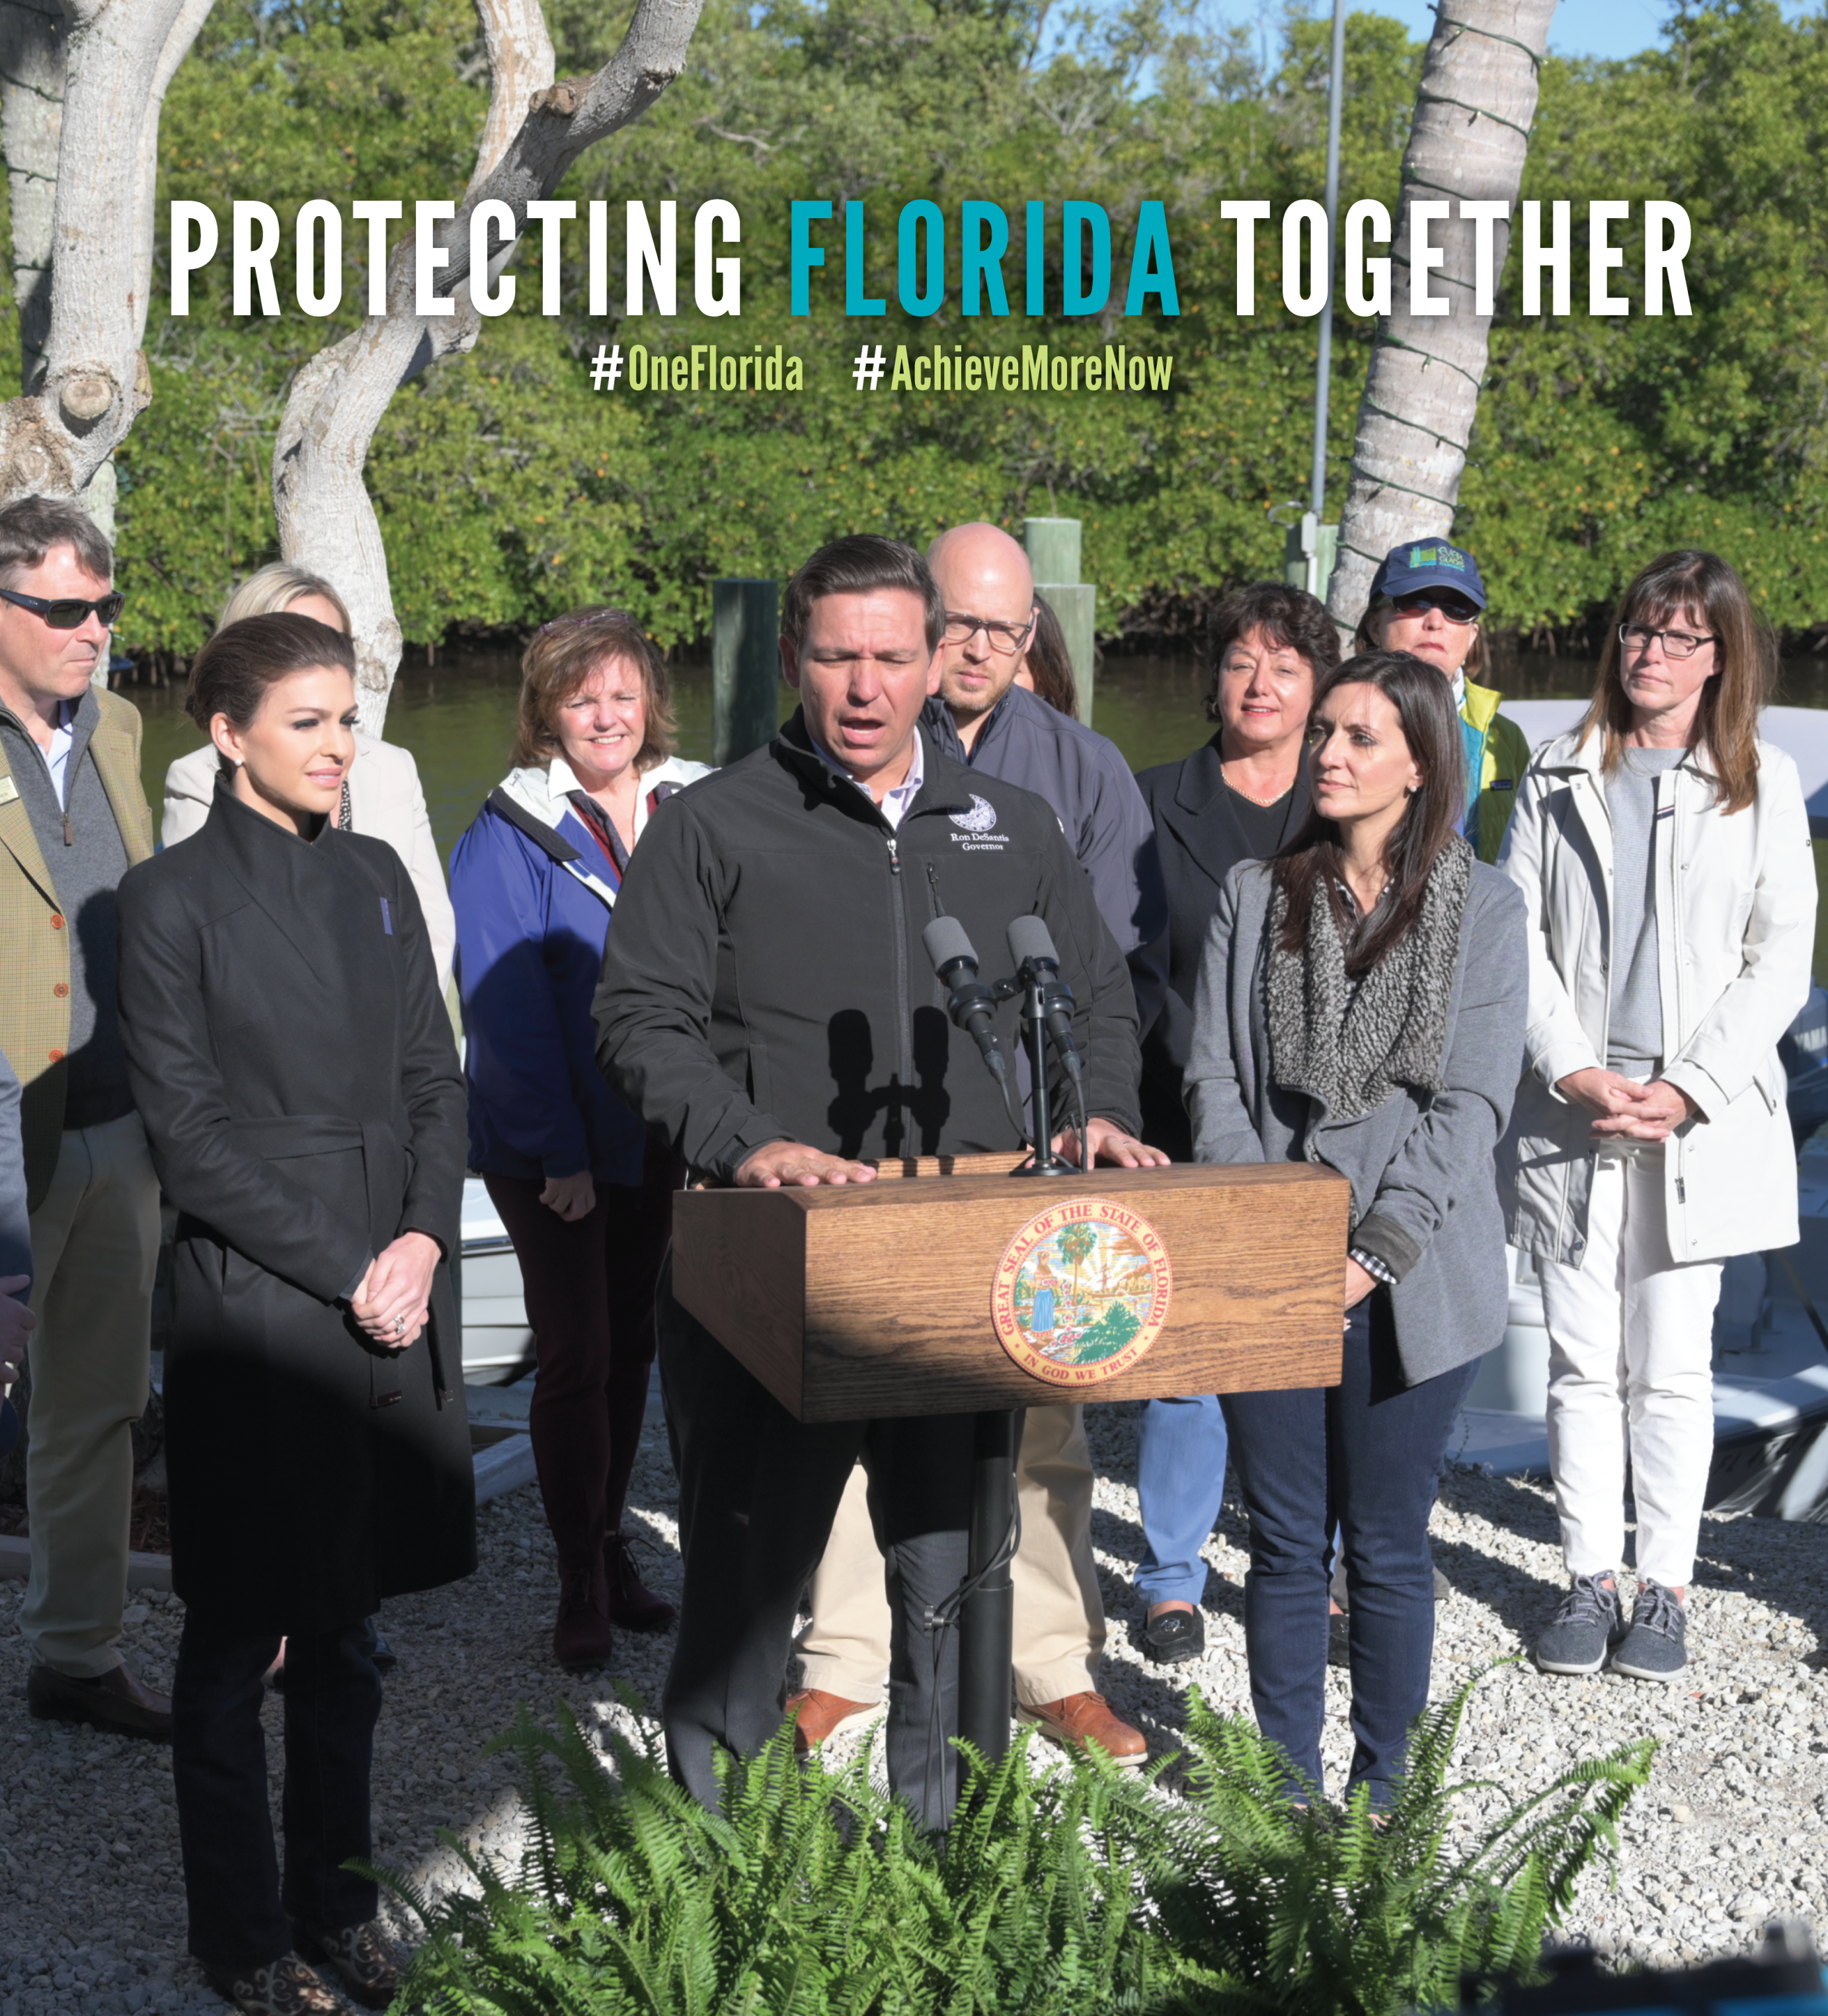 Protecting Florida Together